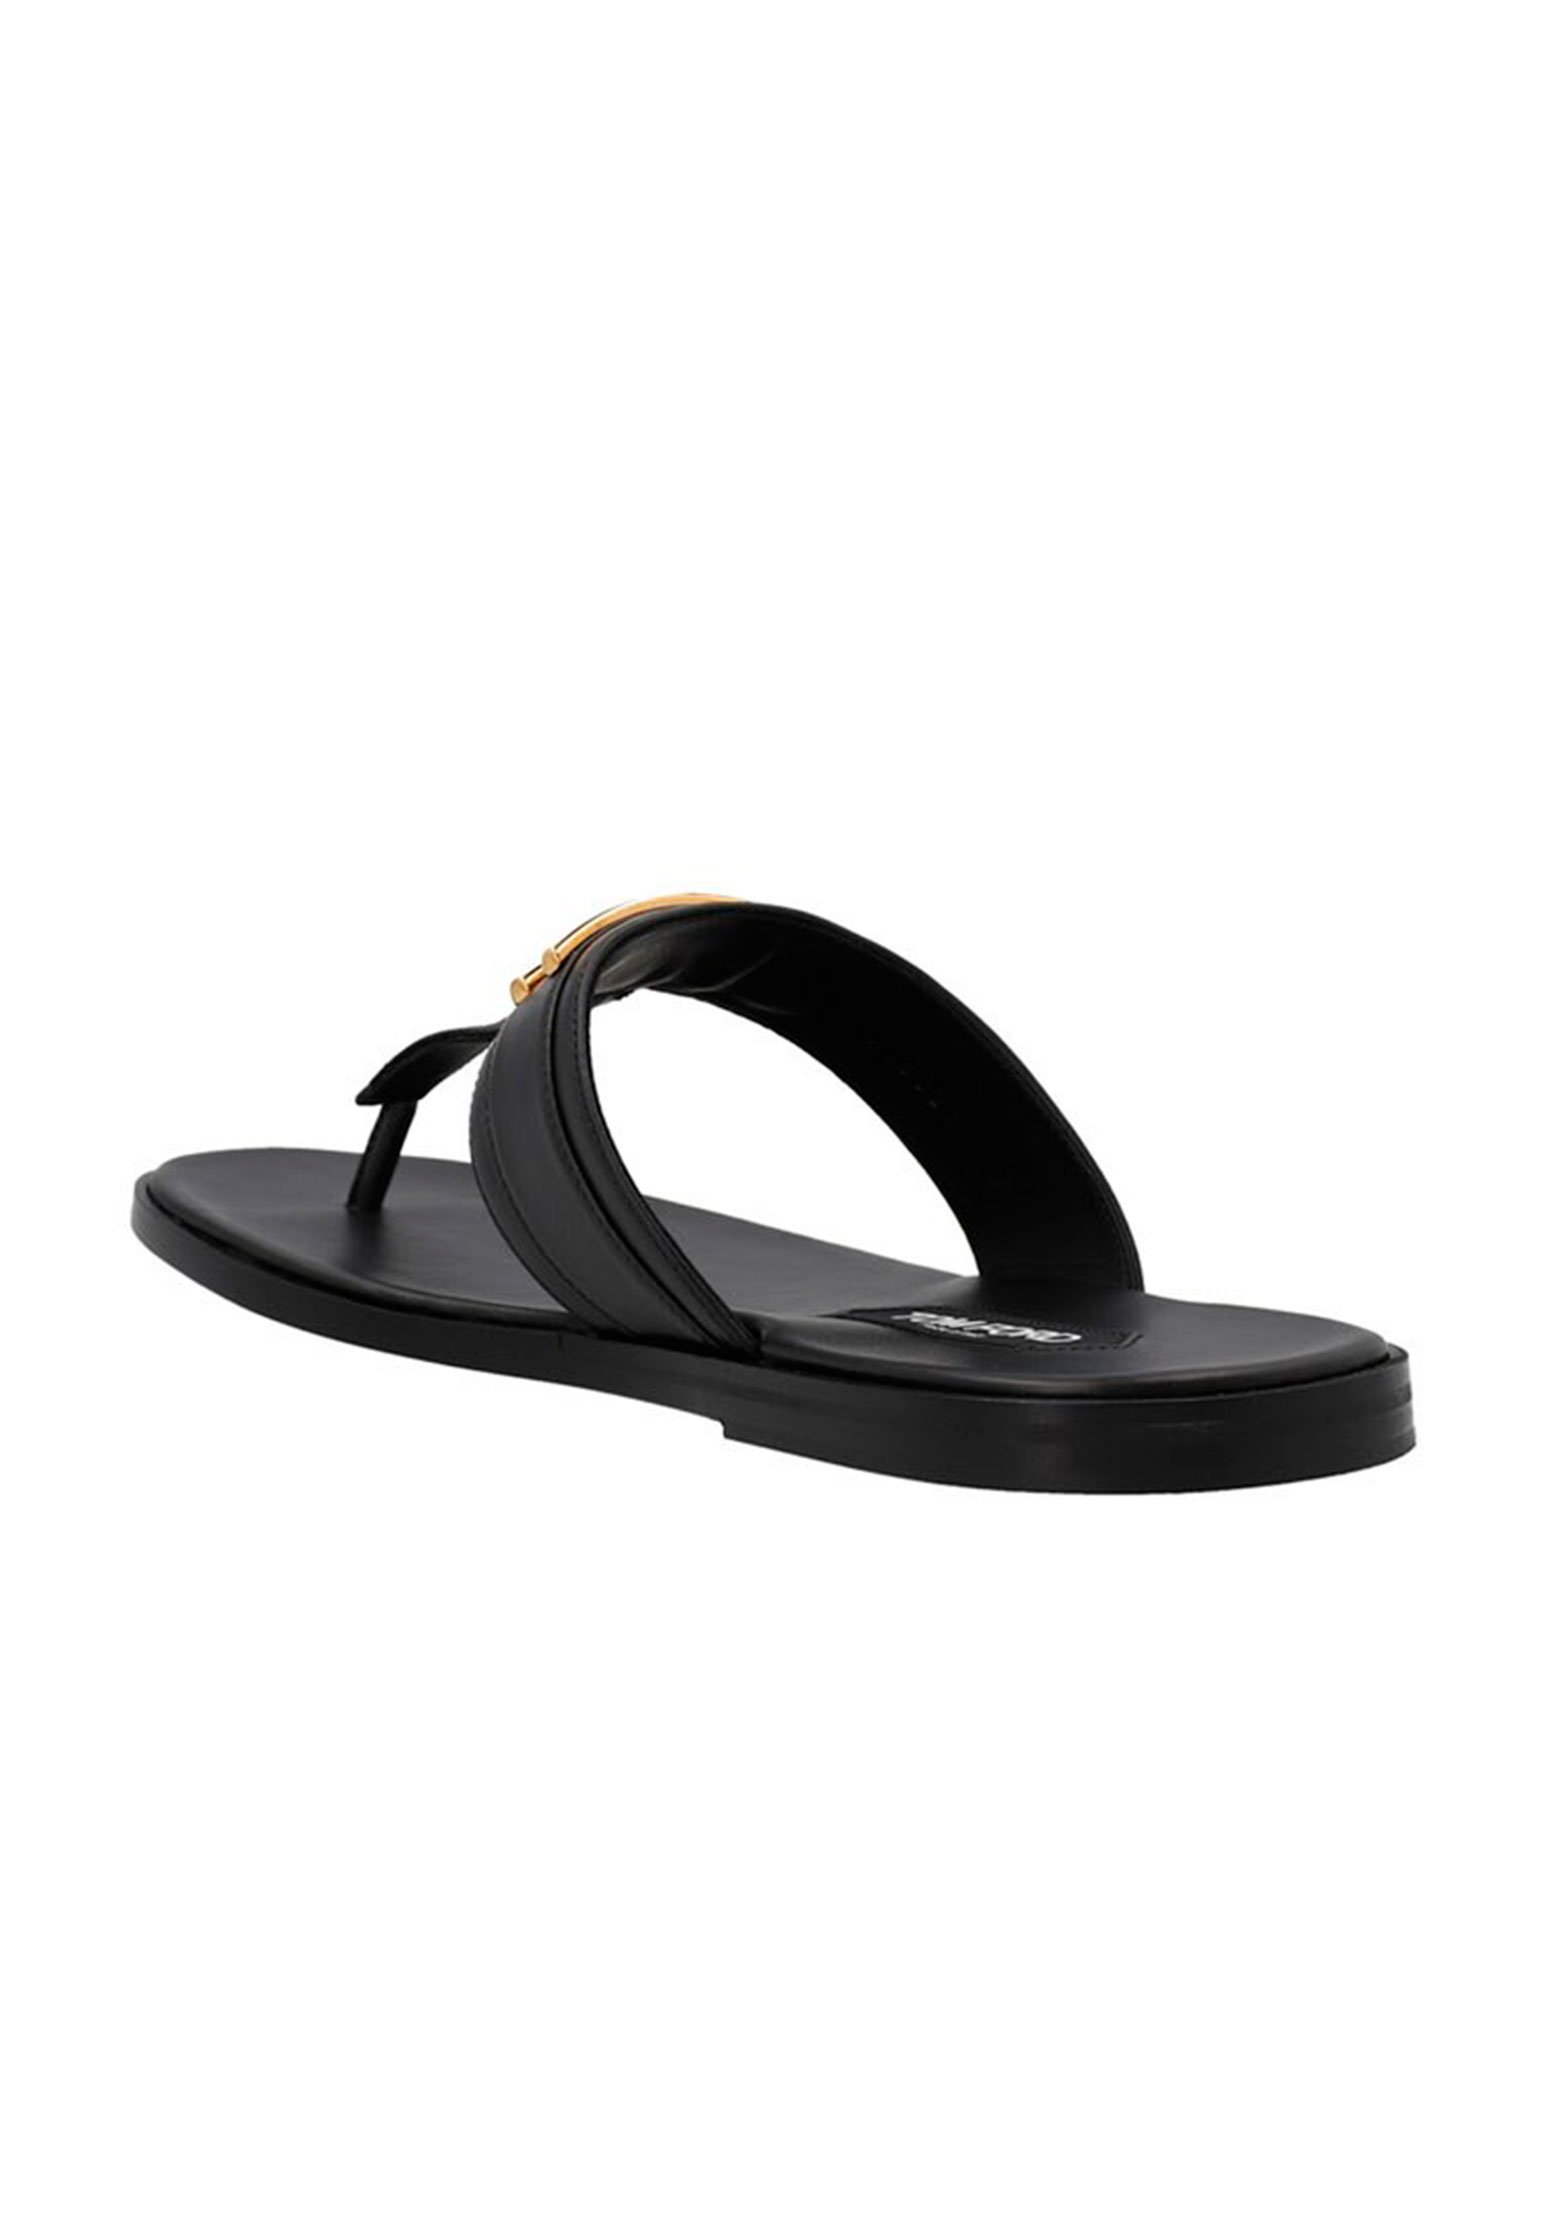 Sandals TOM FORD Color: black (Code: 1061) in online store Allure